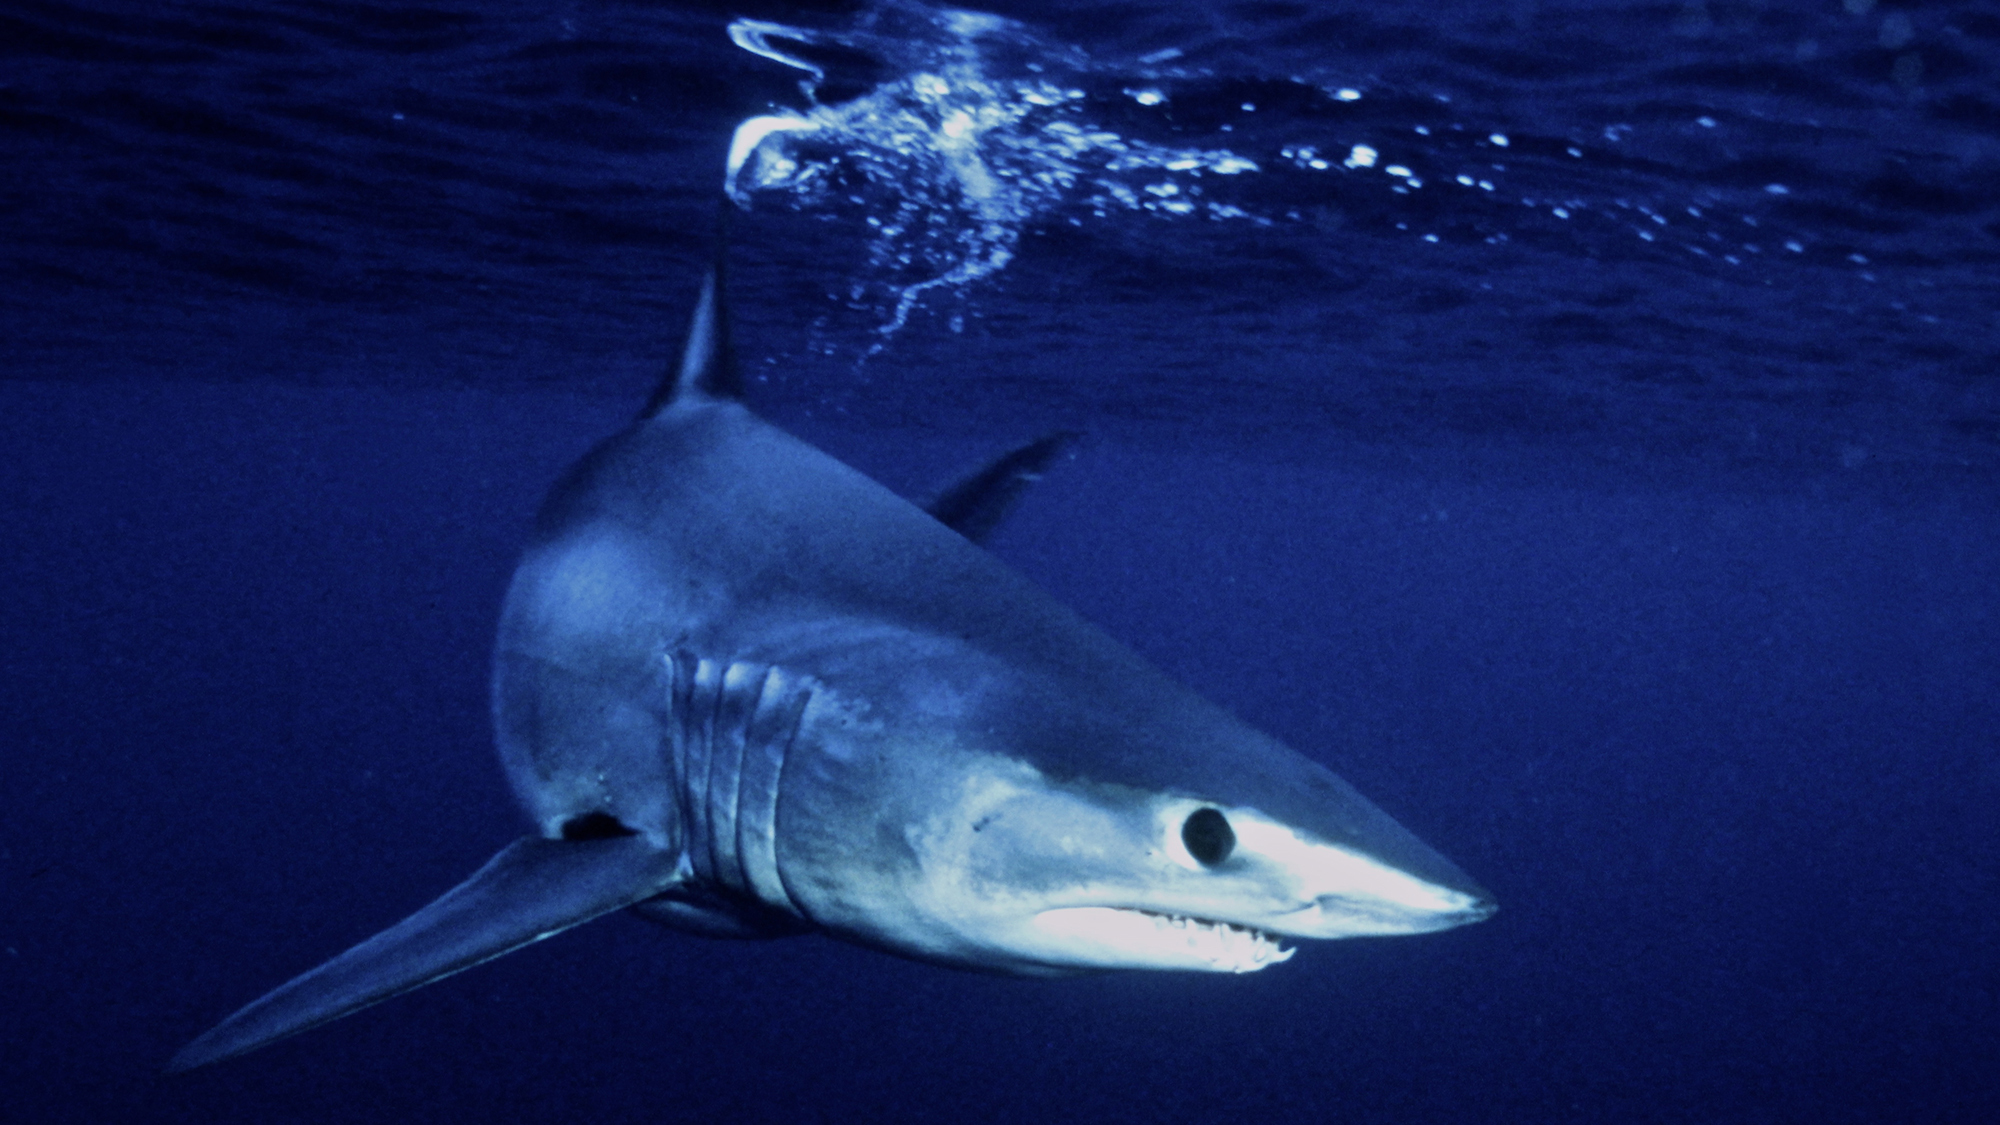 A mako shark swimming in the ocean.